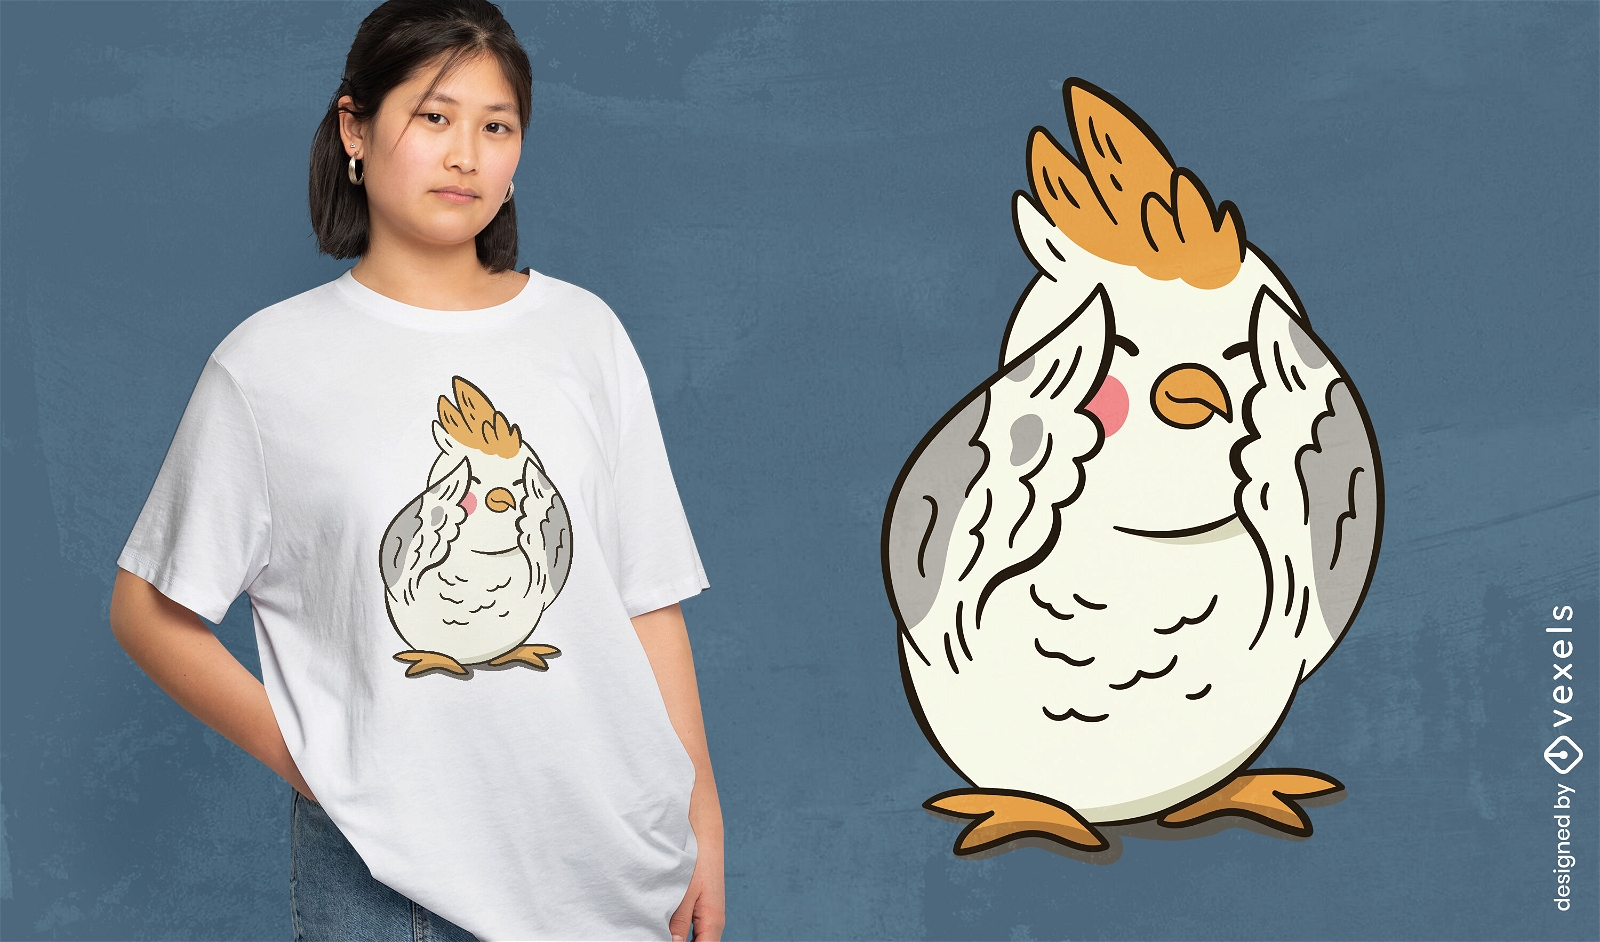 Diseño de camiseta de pájaro peekaboo de dibujos animados.